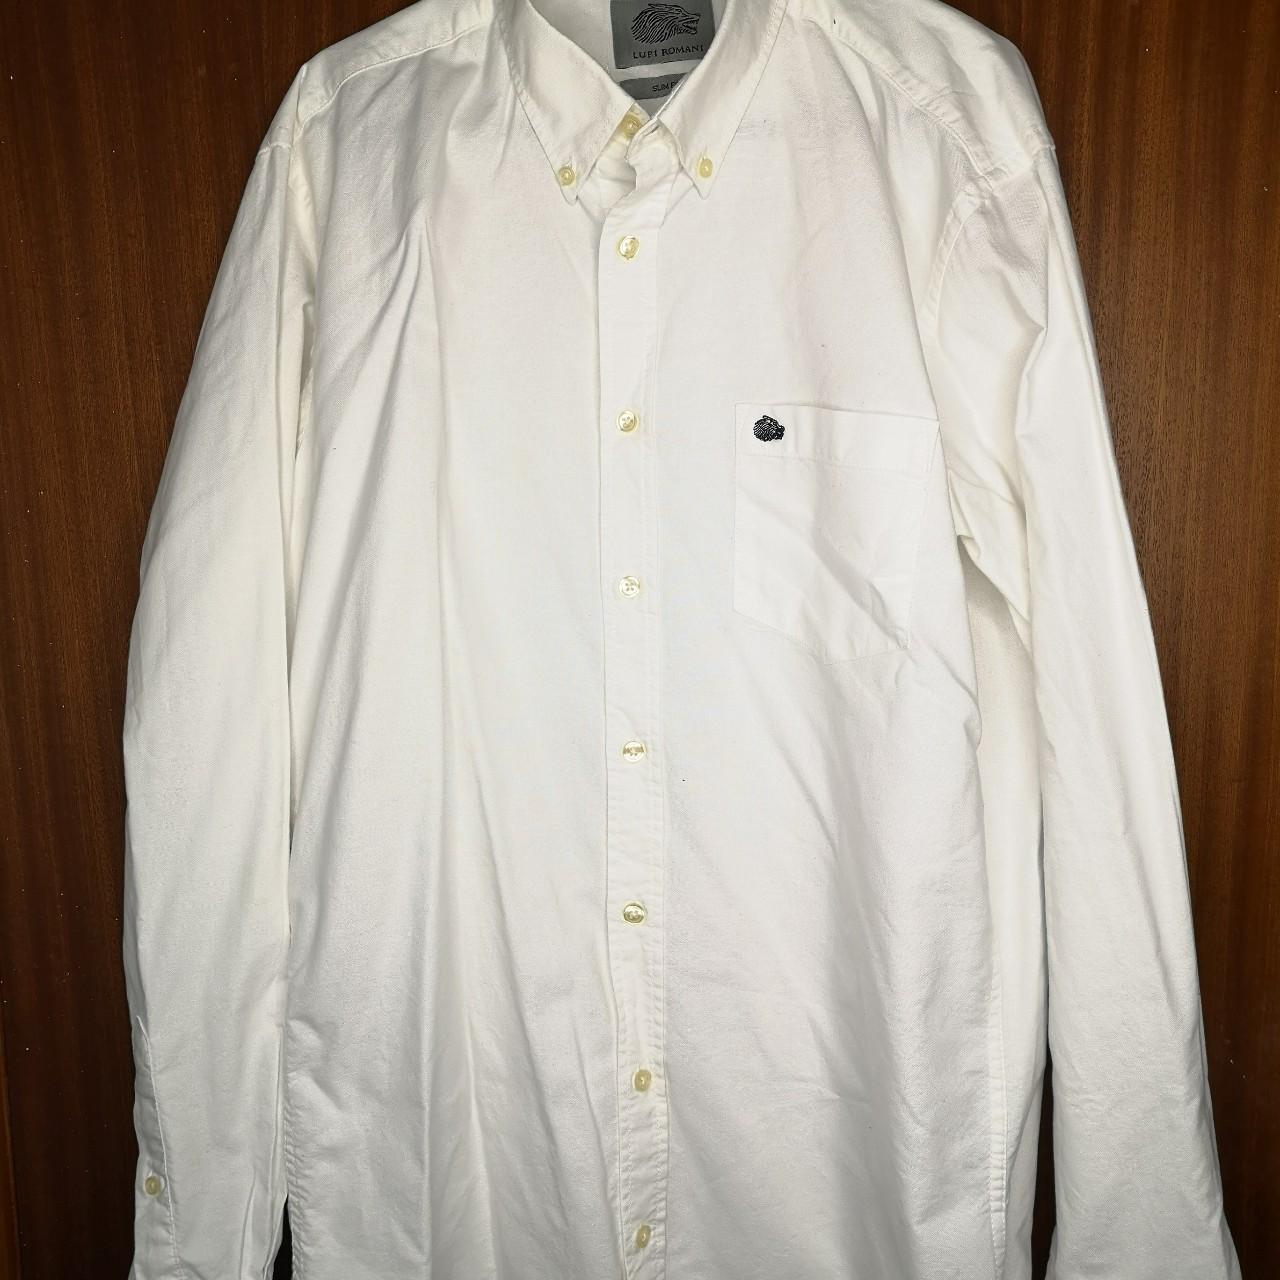 Lupi romani white shirt 👔 Condition 9/10 - Depop